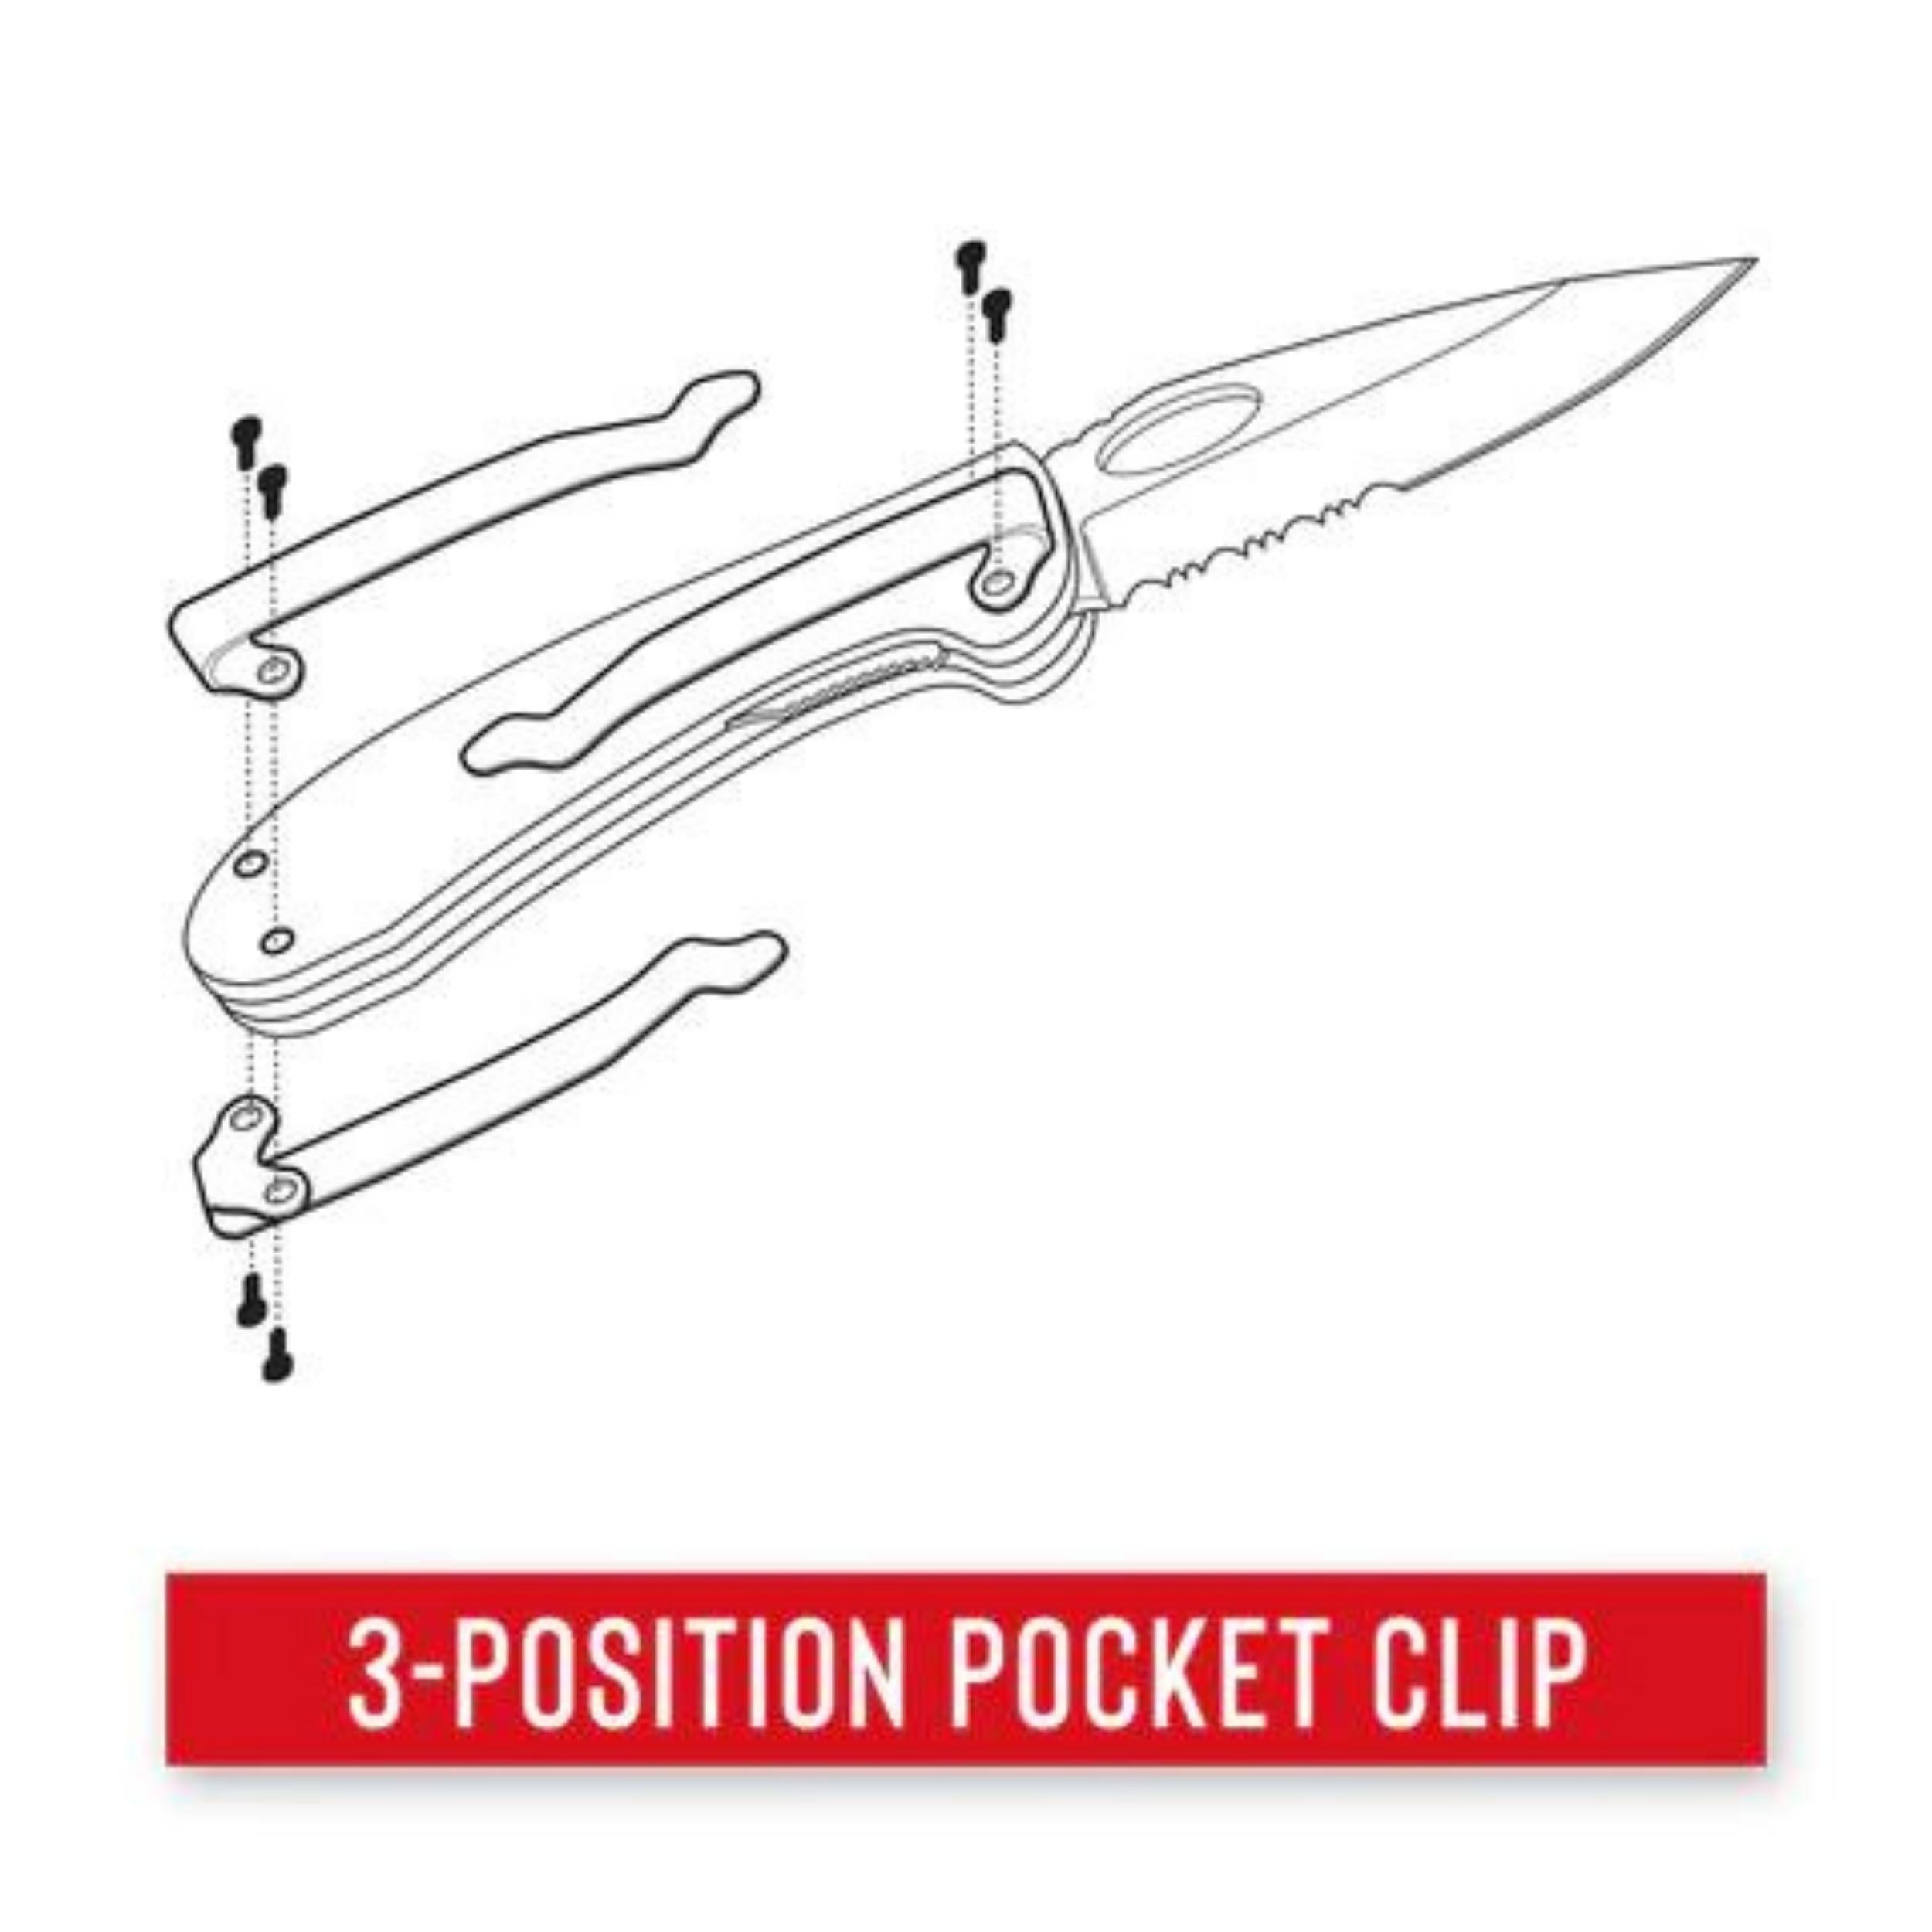 Coast Rx300- Blade Assist Folder Knife